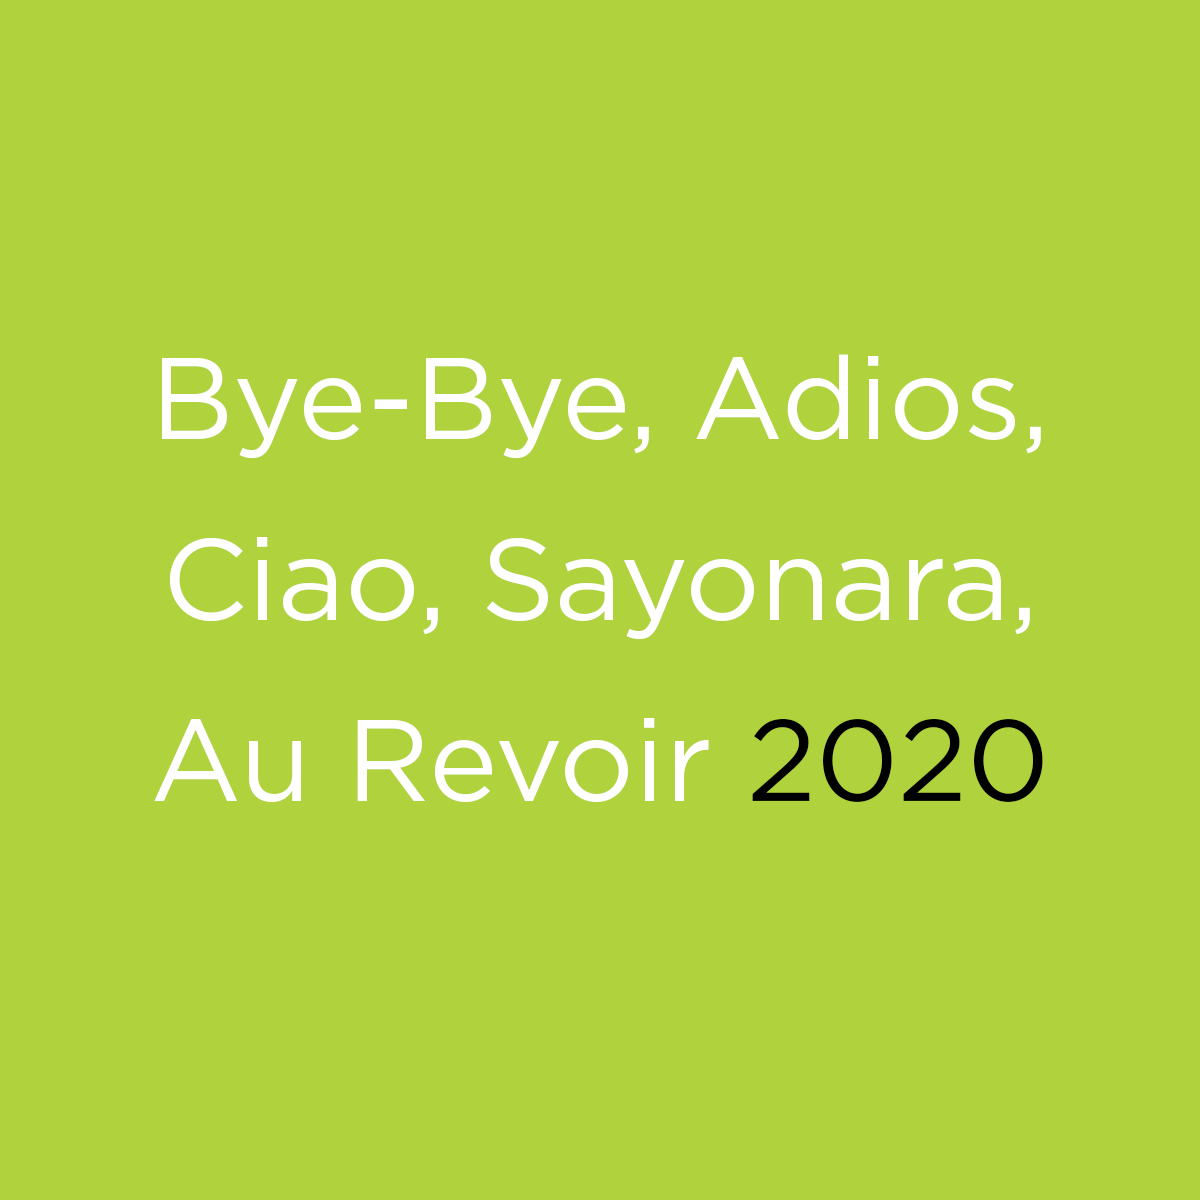 Bye-Bye 2020.